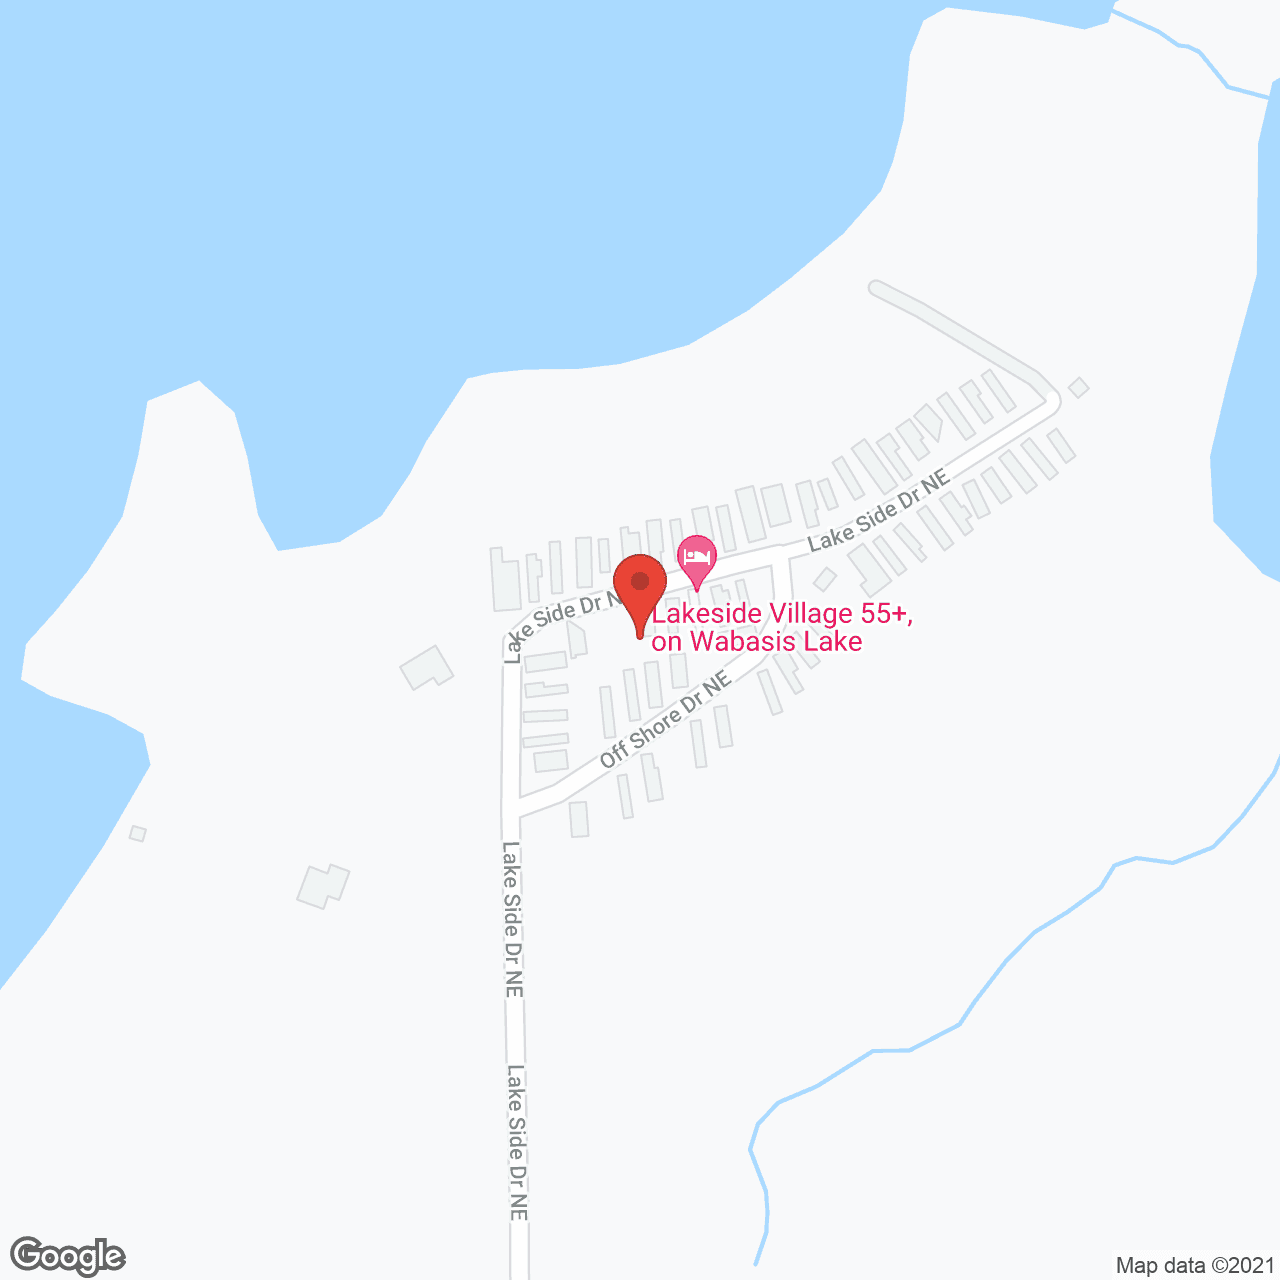 Lakeside Village 55+ Waterfront Community on Wabasis Lake in google map